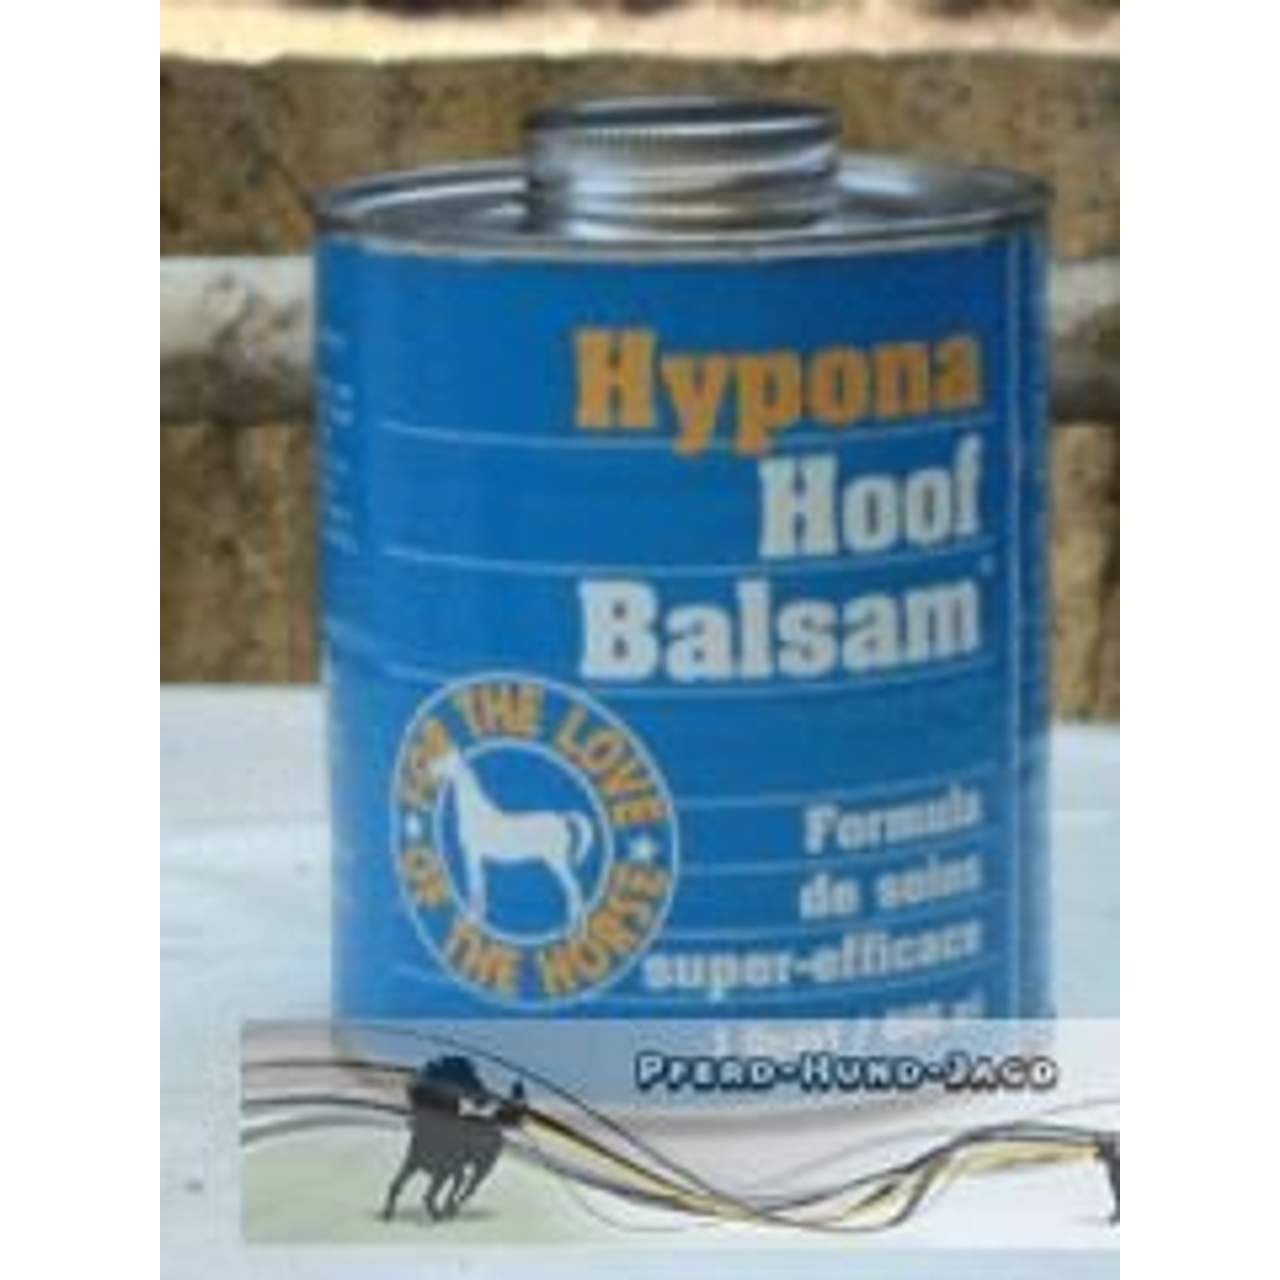 Hypona Hoof Balsam